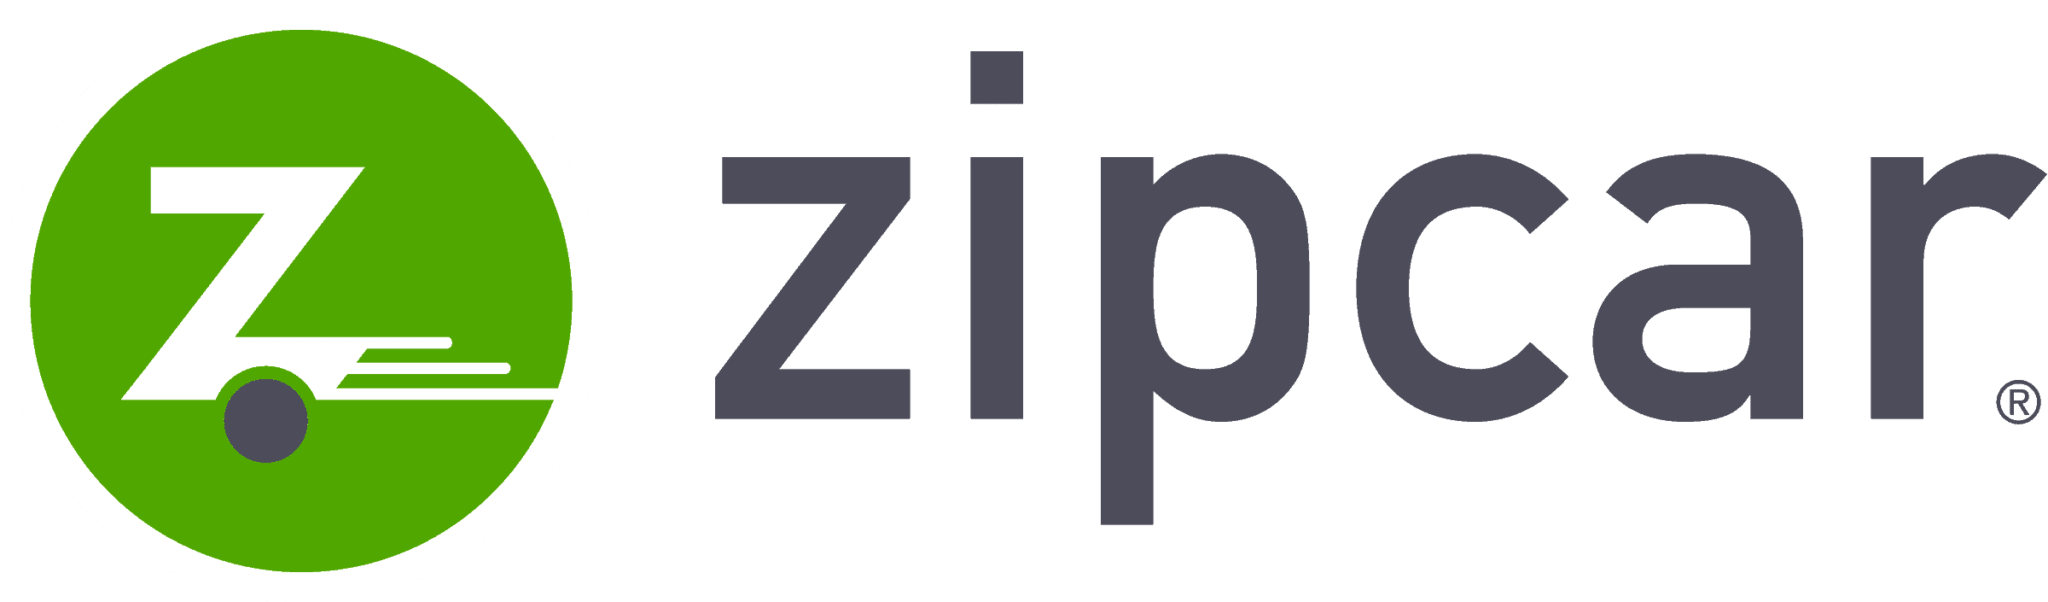 Zipcar Review